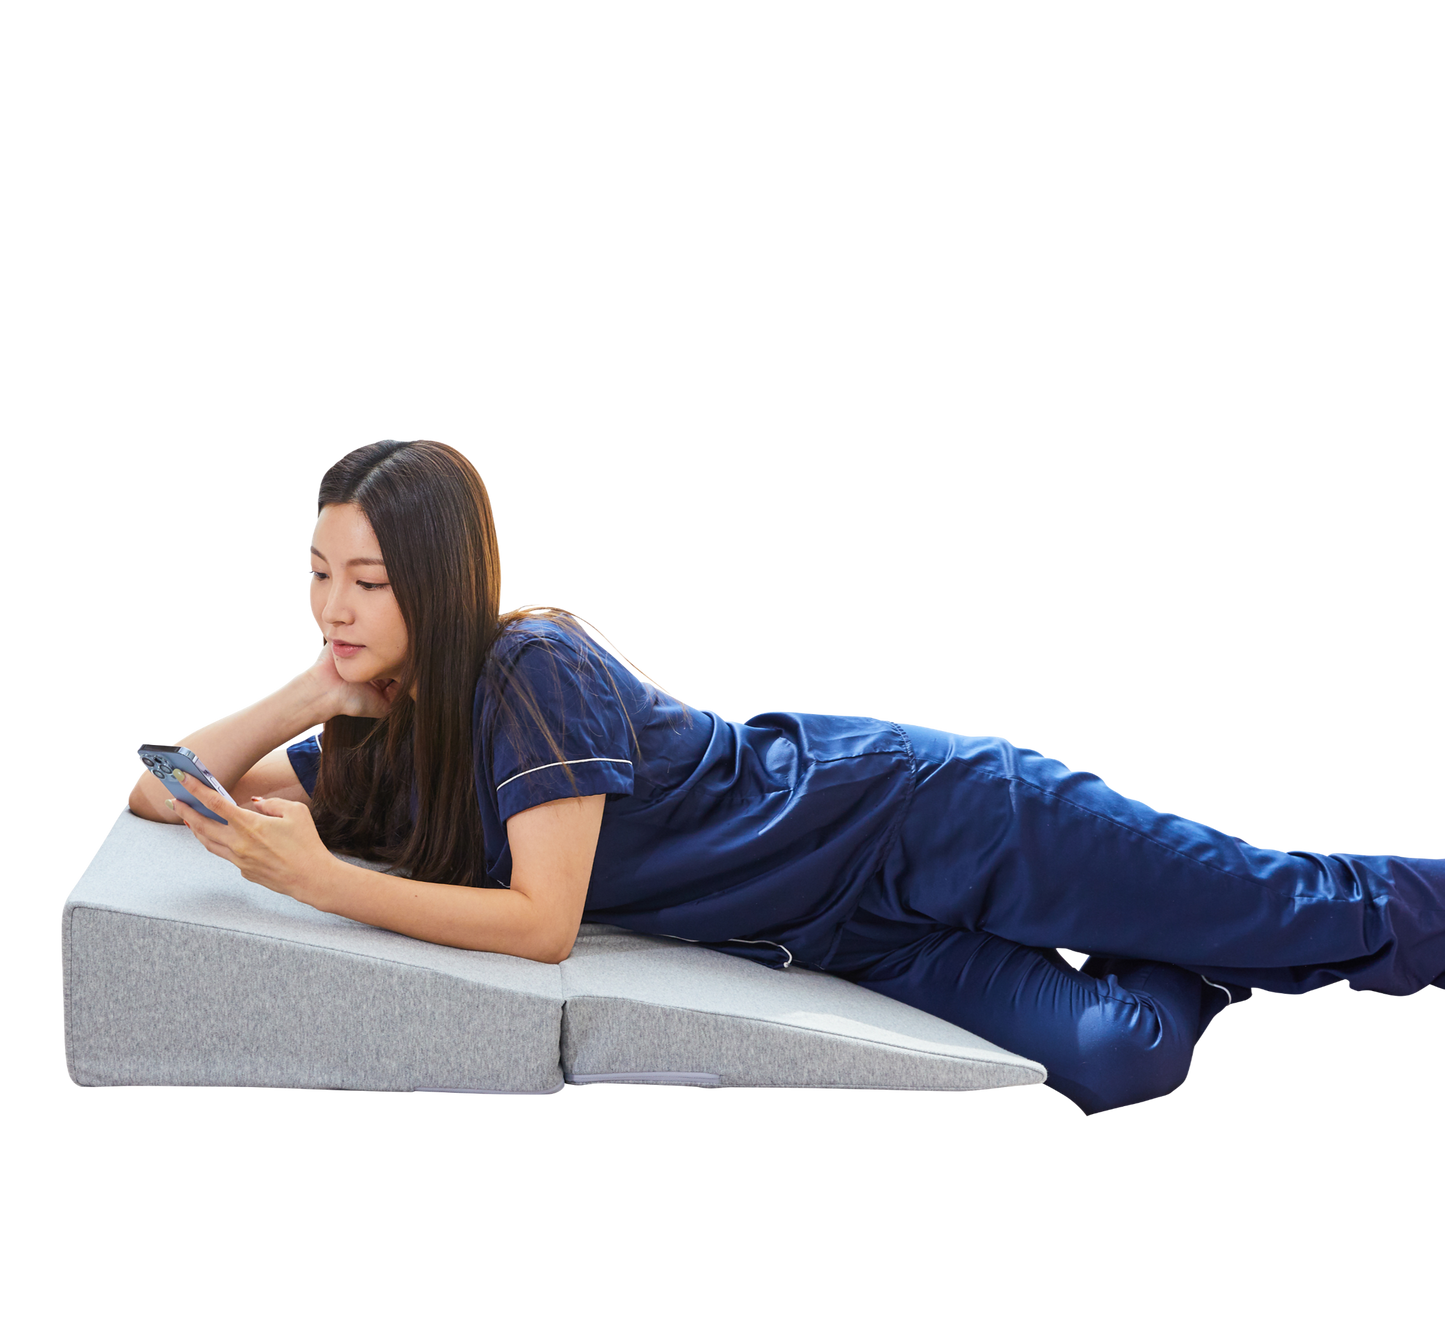 Dr.Shinウエッジピロー  睡眠の専門家＆医師が開発した三角枕